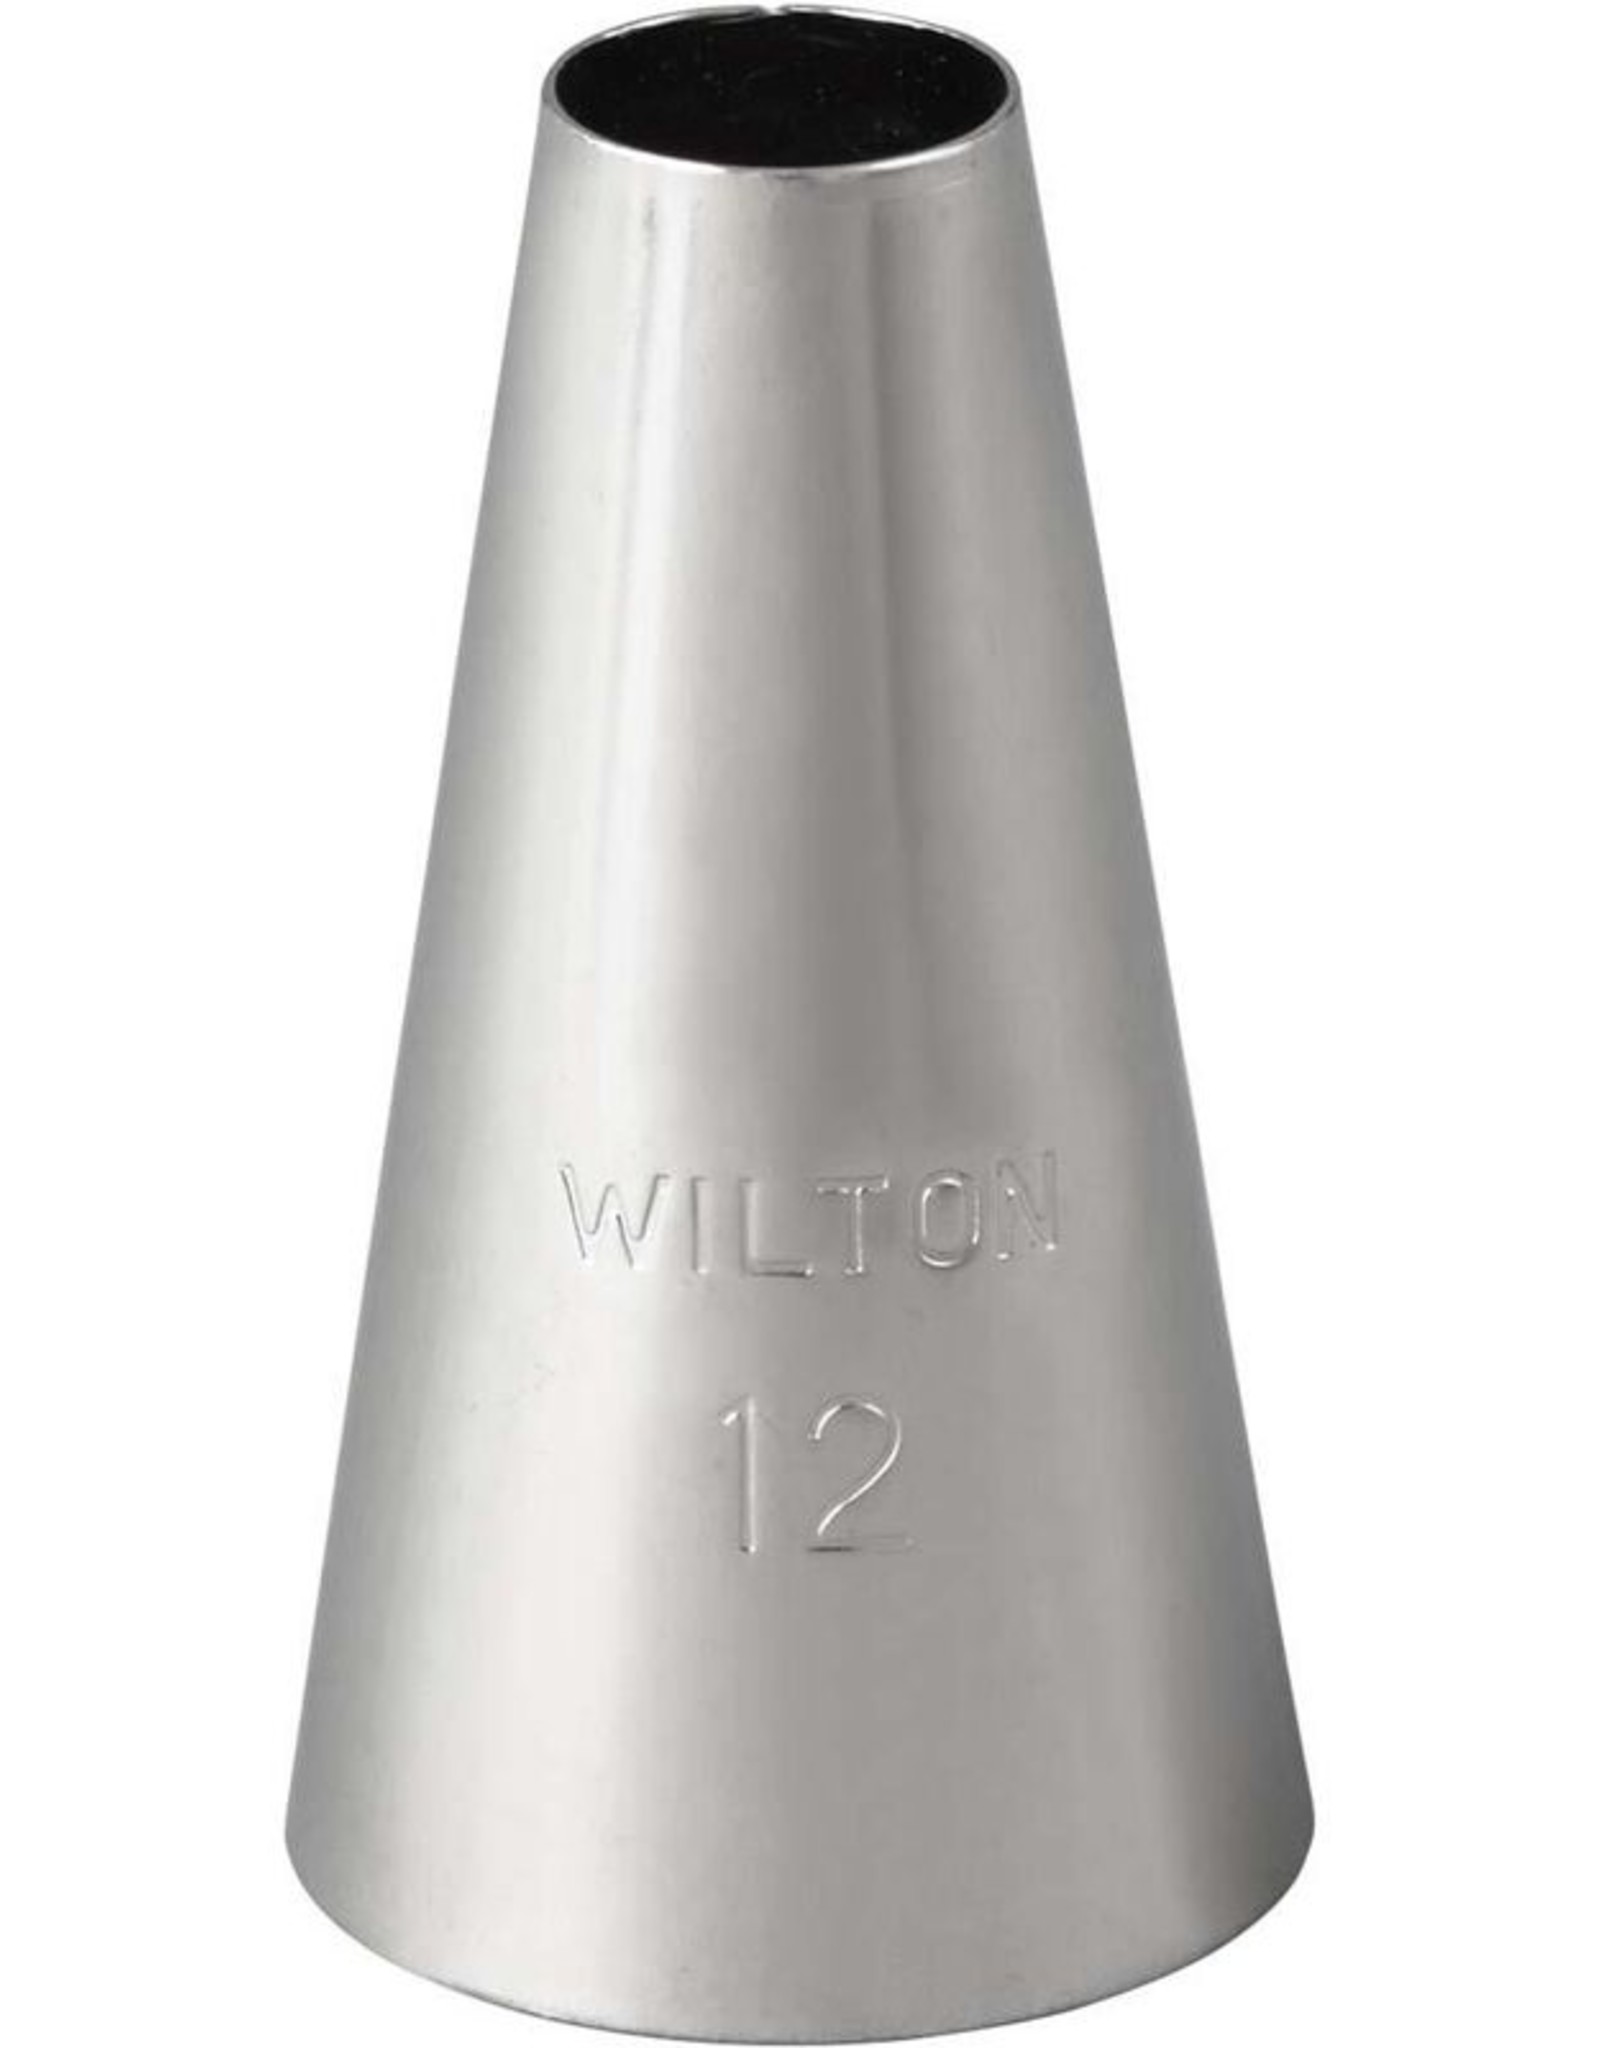 Wilton Wilton Decorating Tip #012 Round Carded